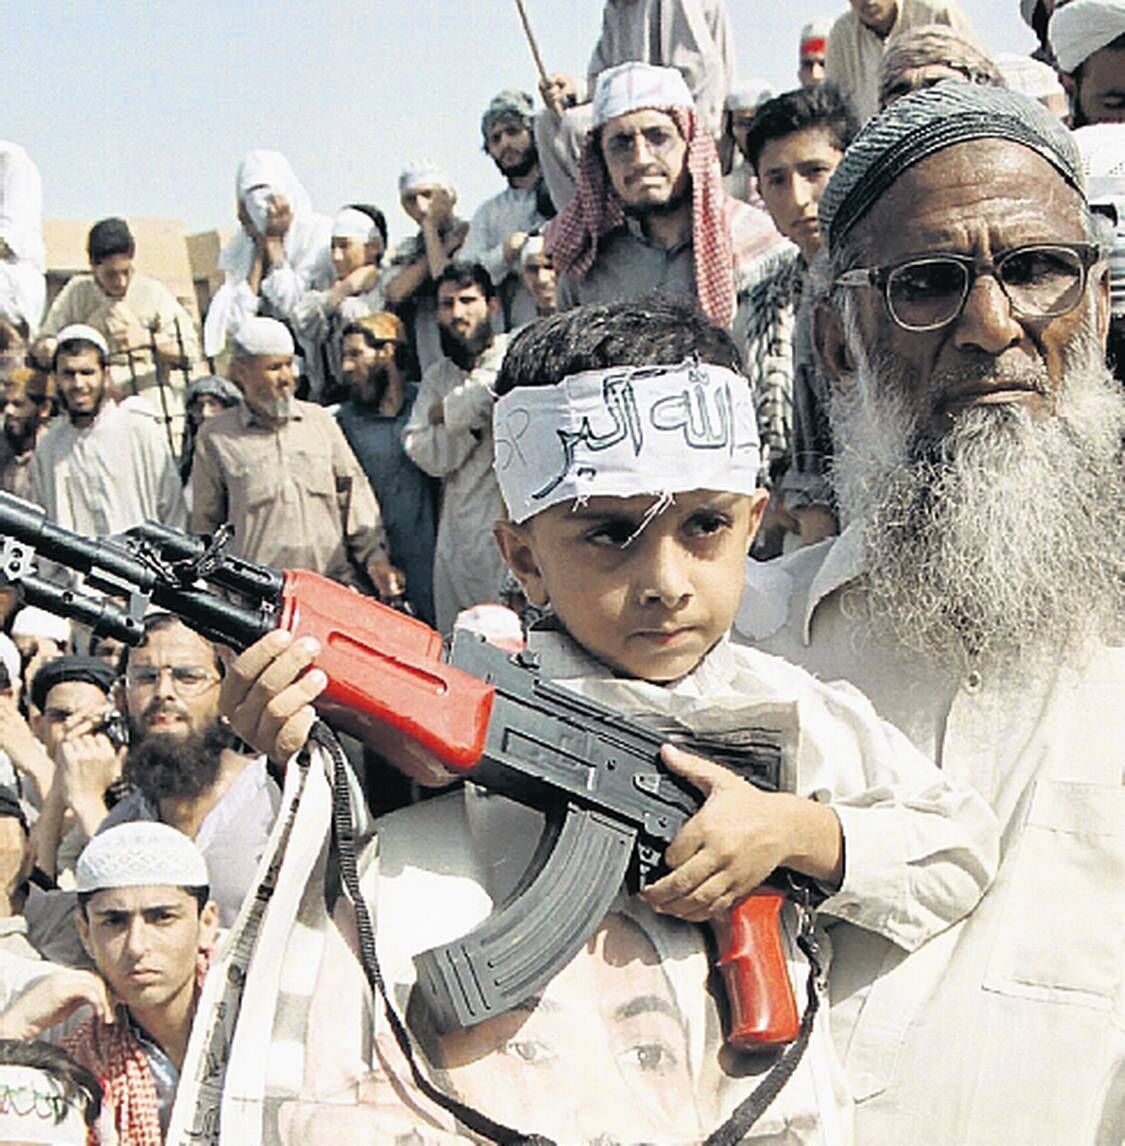 The murder of Hindu leader Kamlesh Tiwari will affect Islam in India